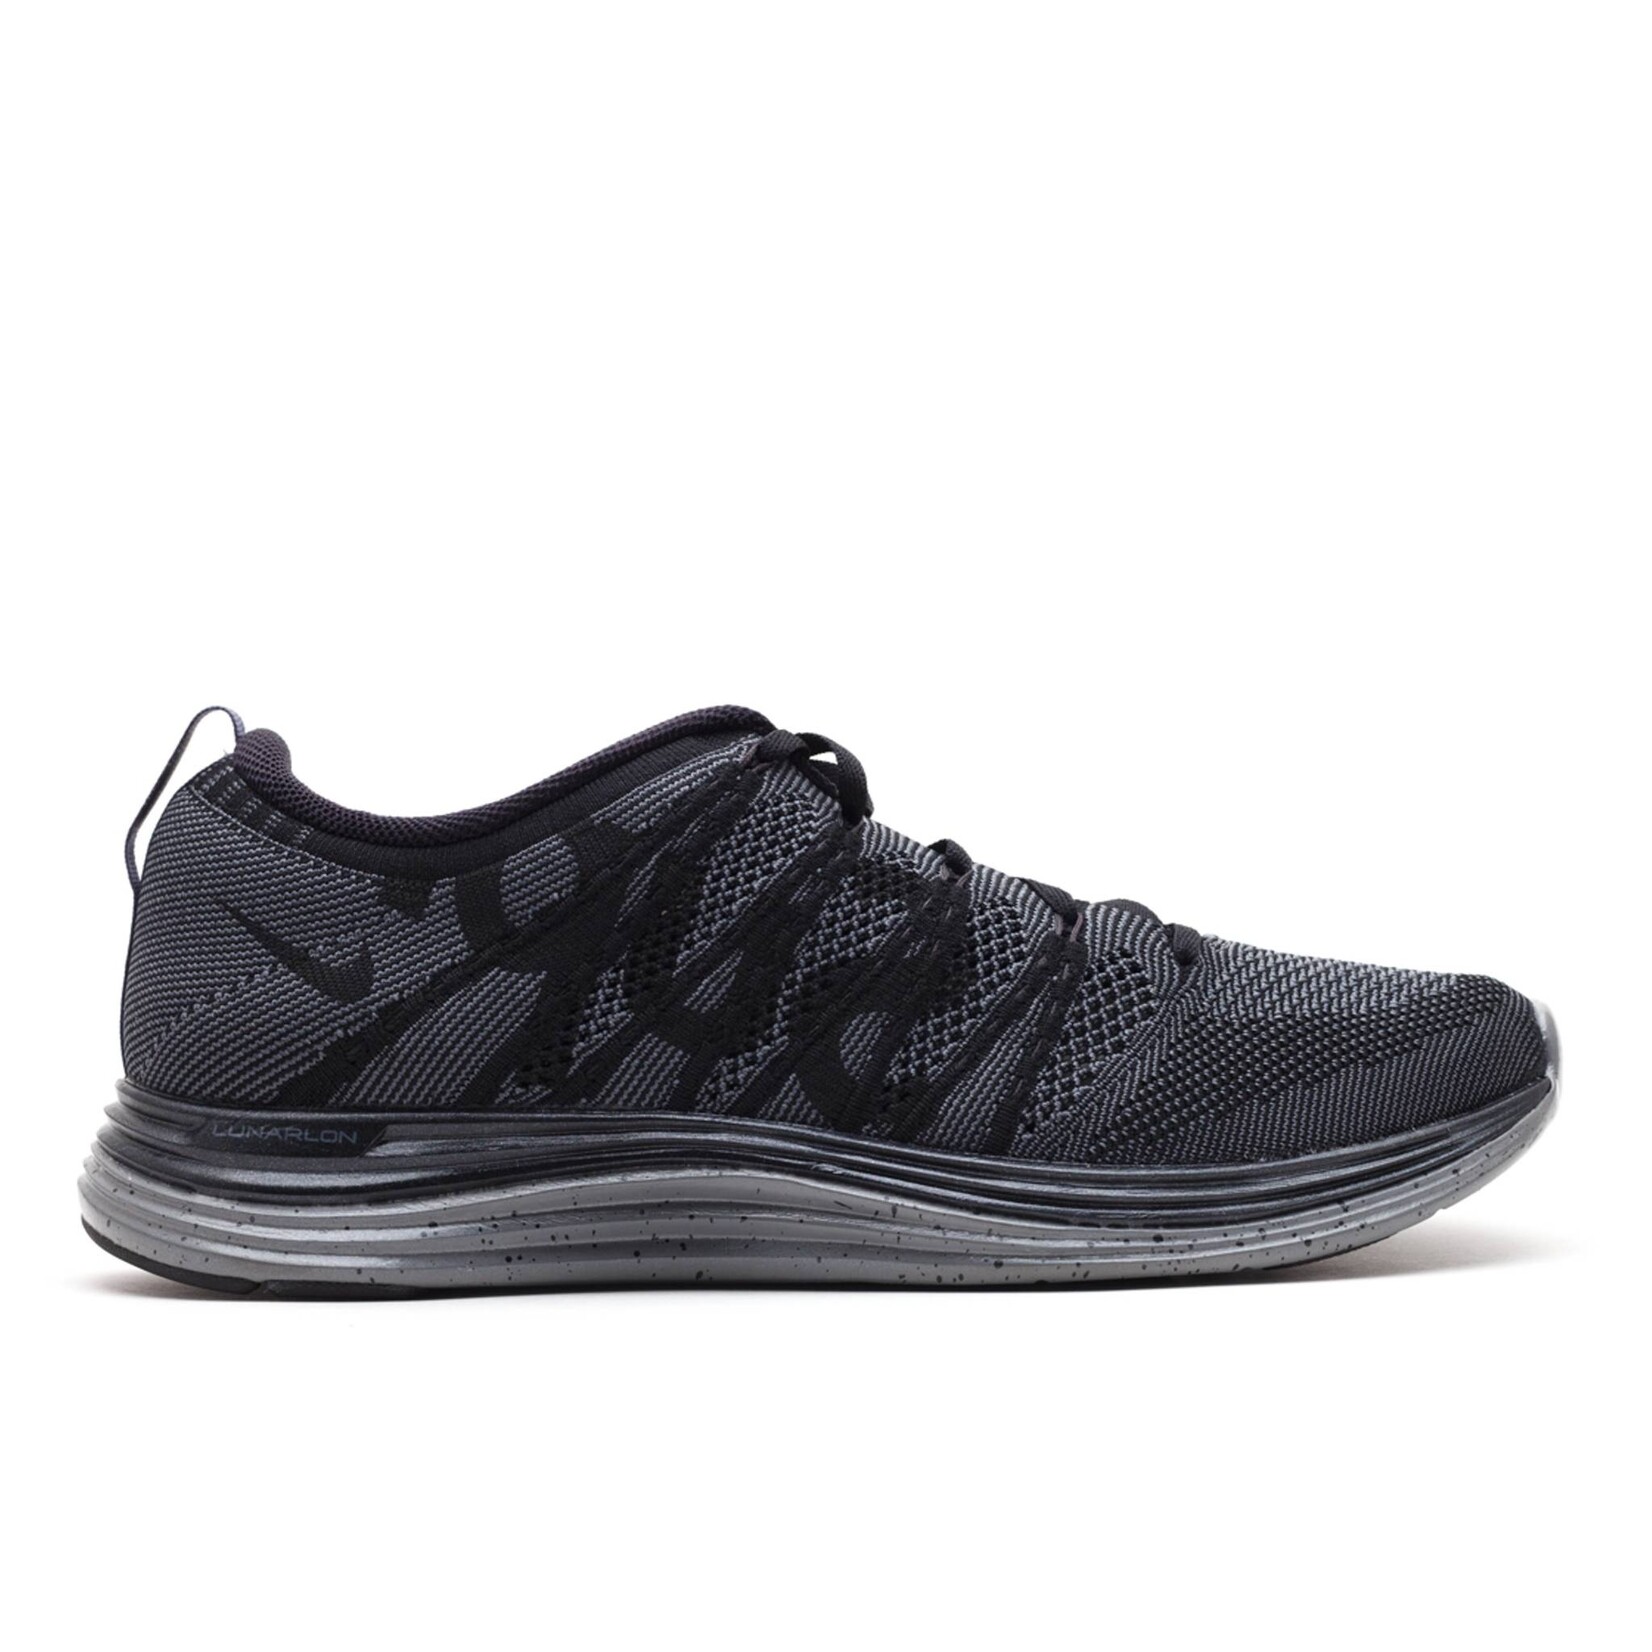 Nike Nike Flyknit Lunar1+ Supreme Black Size 9.5, DS BRAND NEW